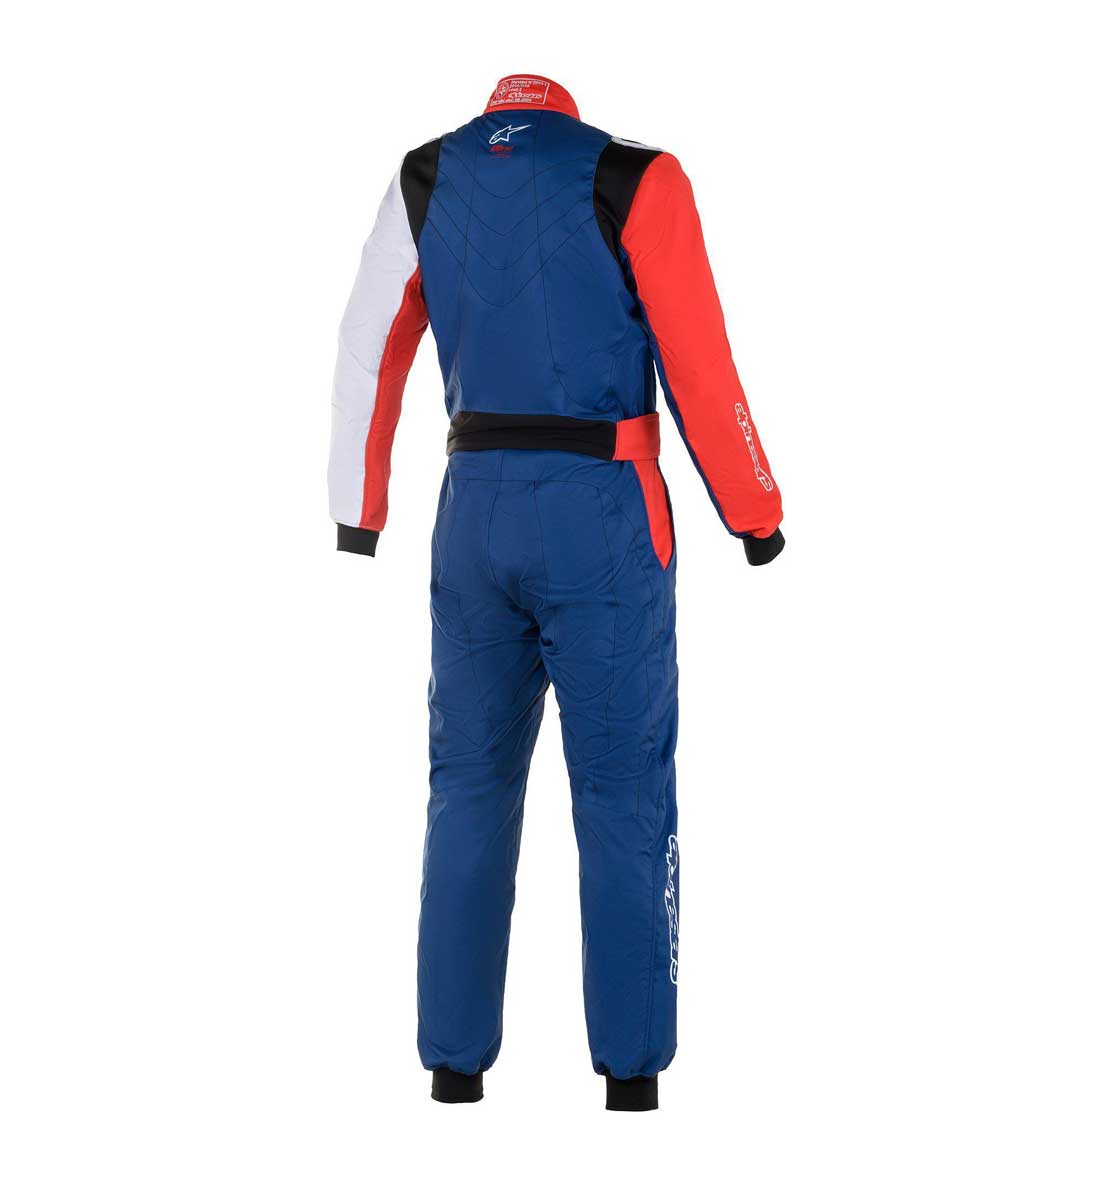 Alpinestars KMX-9 v2 Youth GRAPHIC Suit - Navy/Red/White